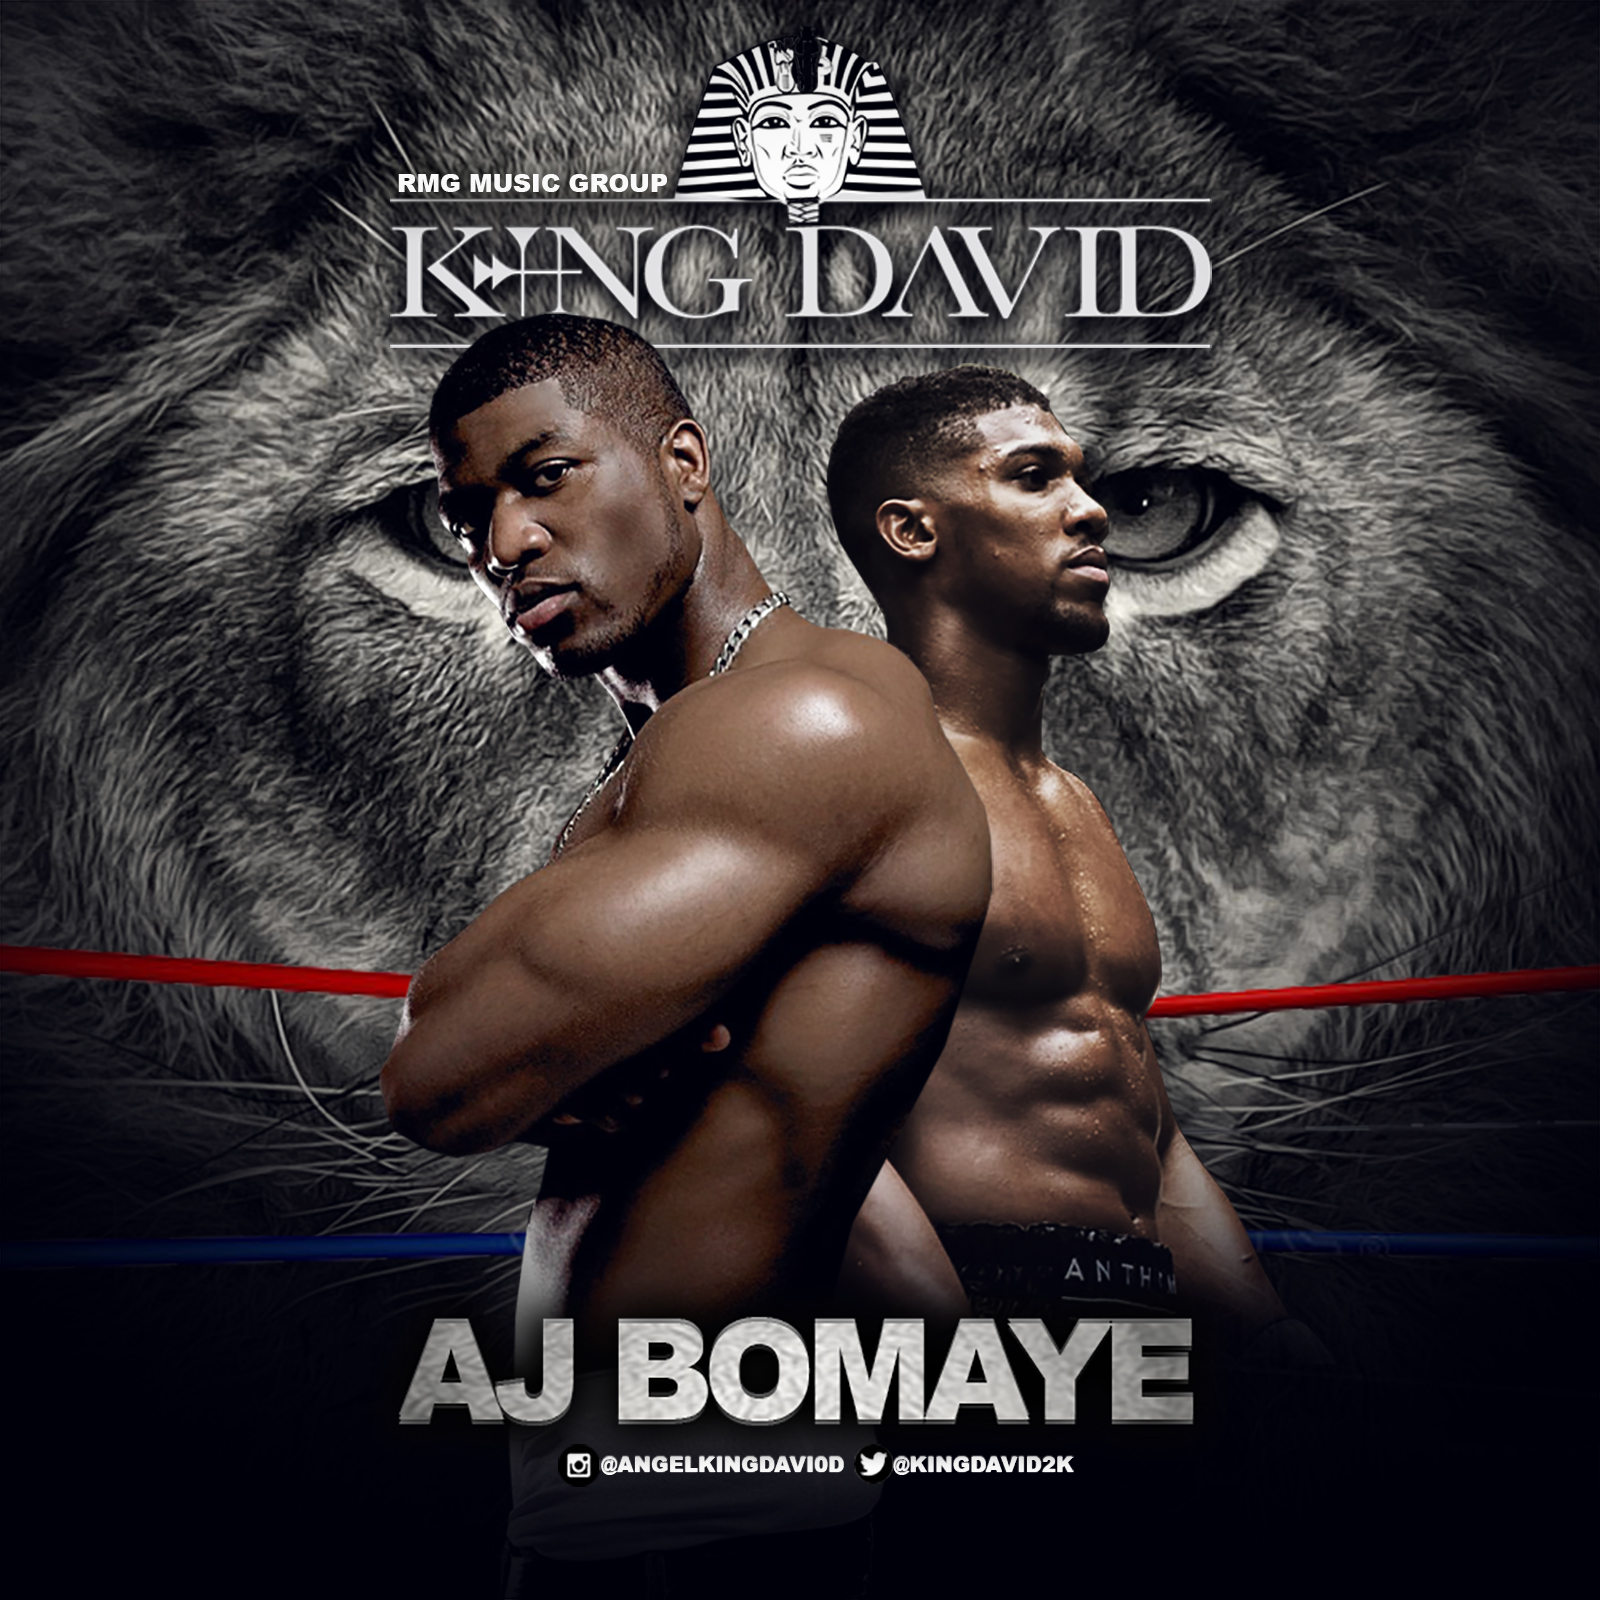 Video: king David - "AJ BOMAYE" Starring Anthony Joshua || @KingDavid2K